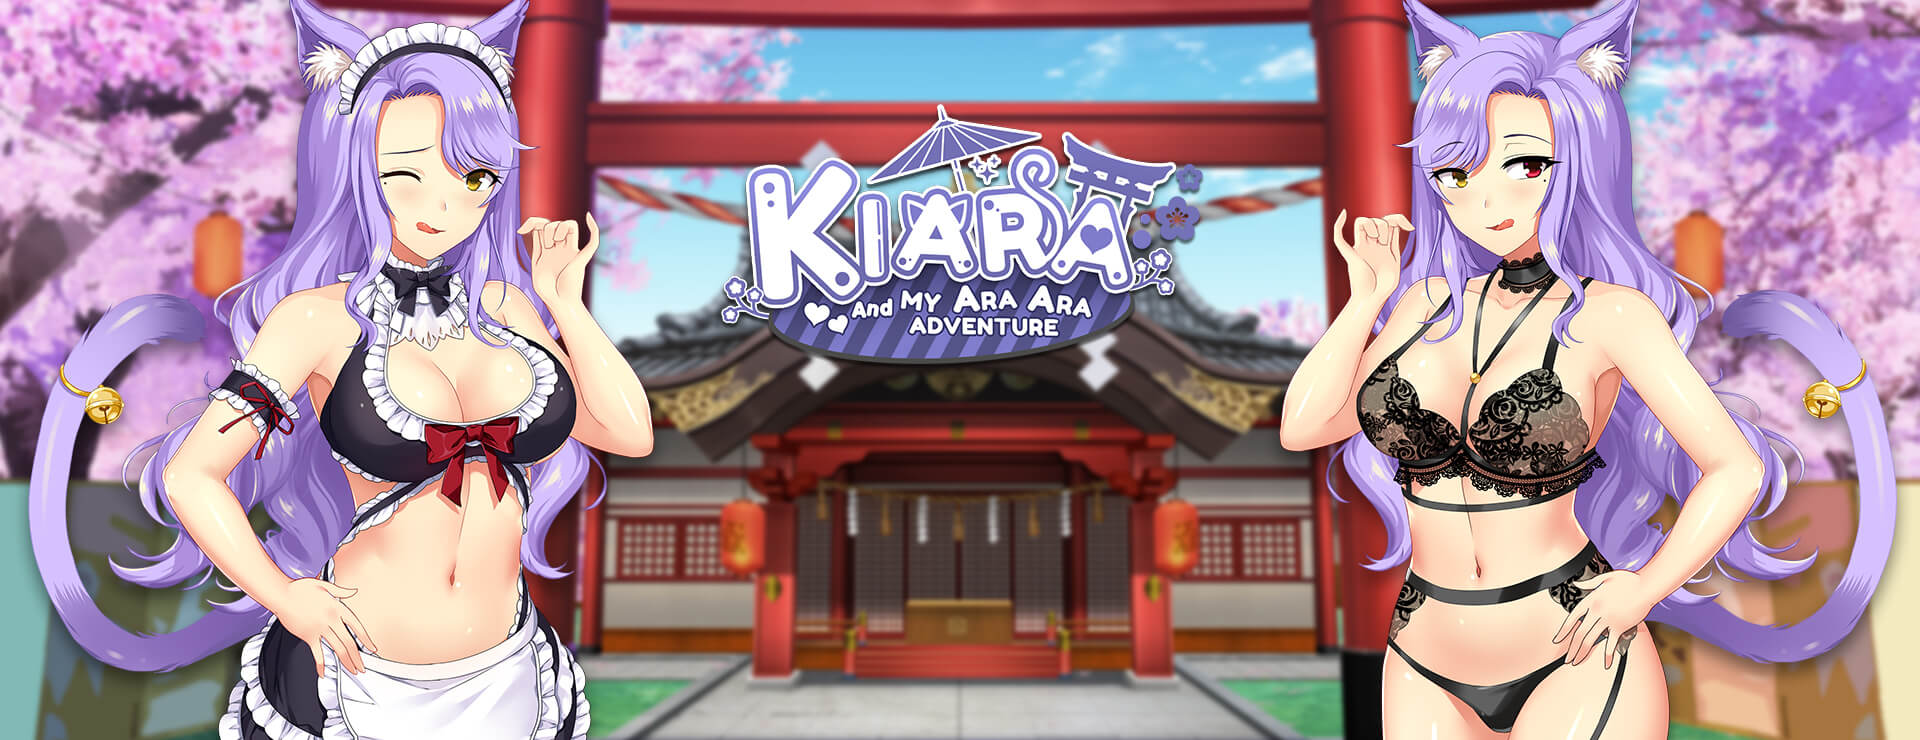 Kiara and my Ara Ara Adventure - Novela Visual Juego